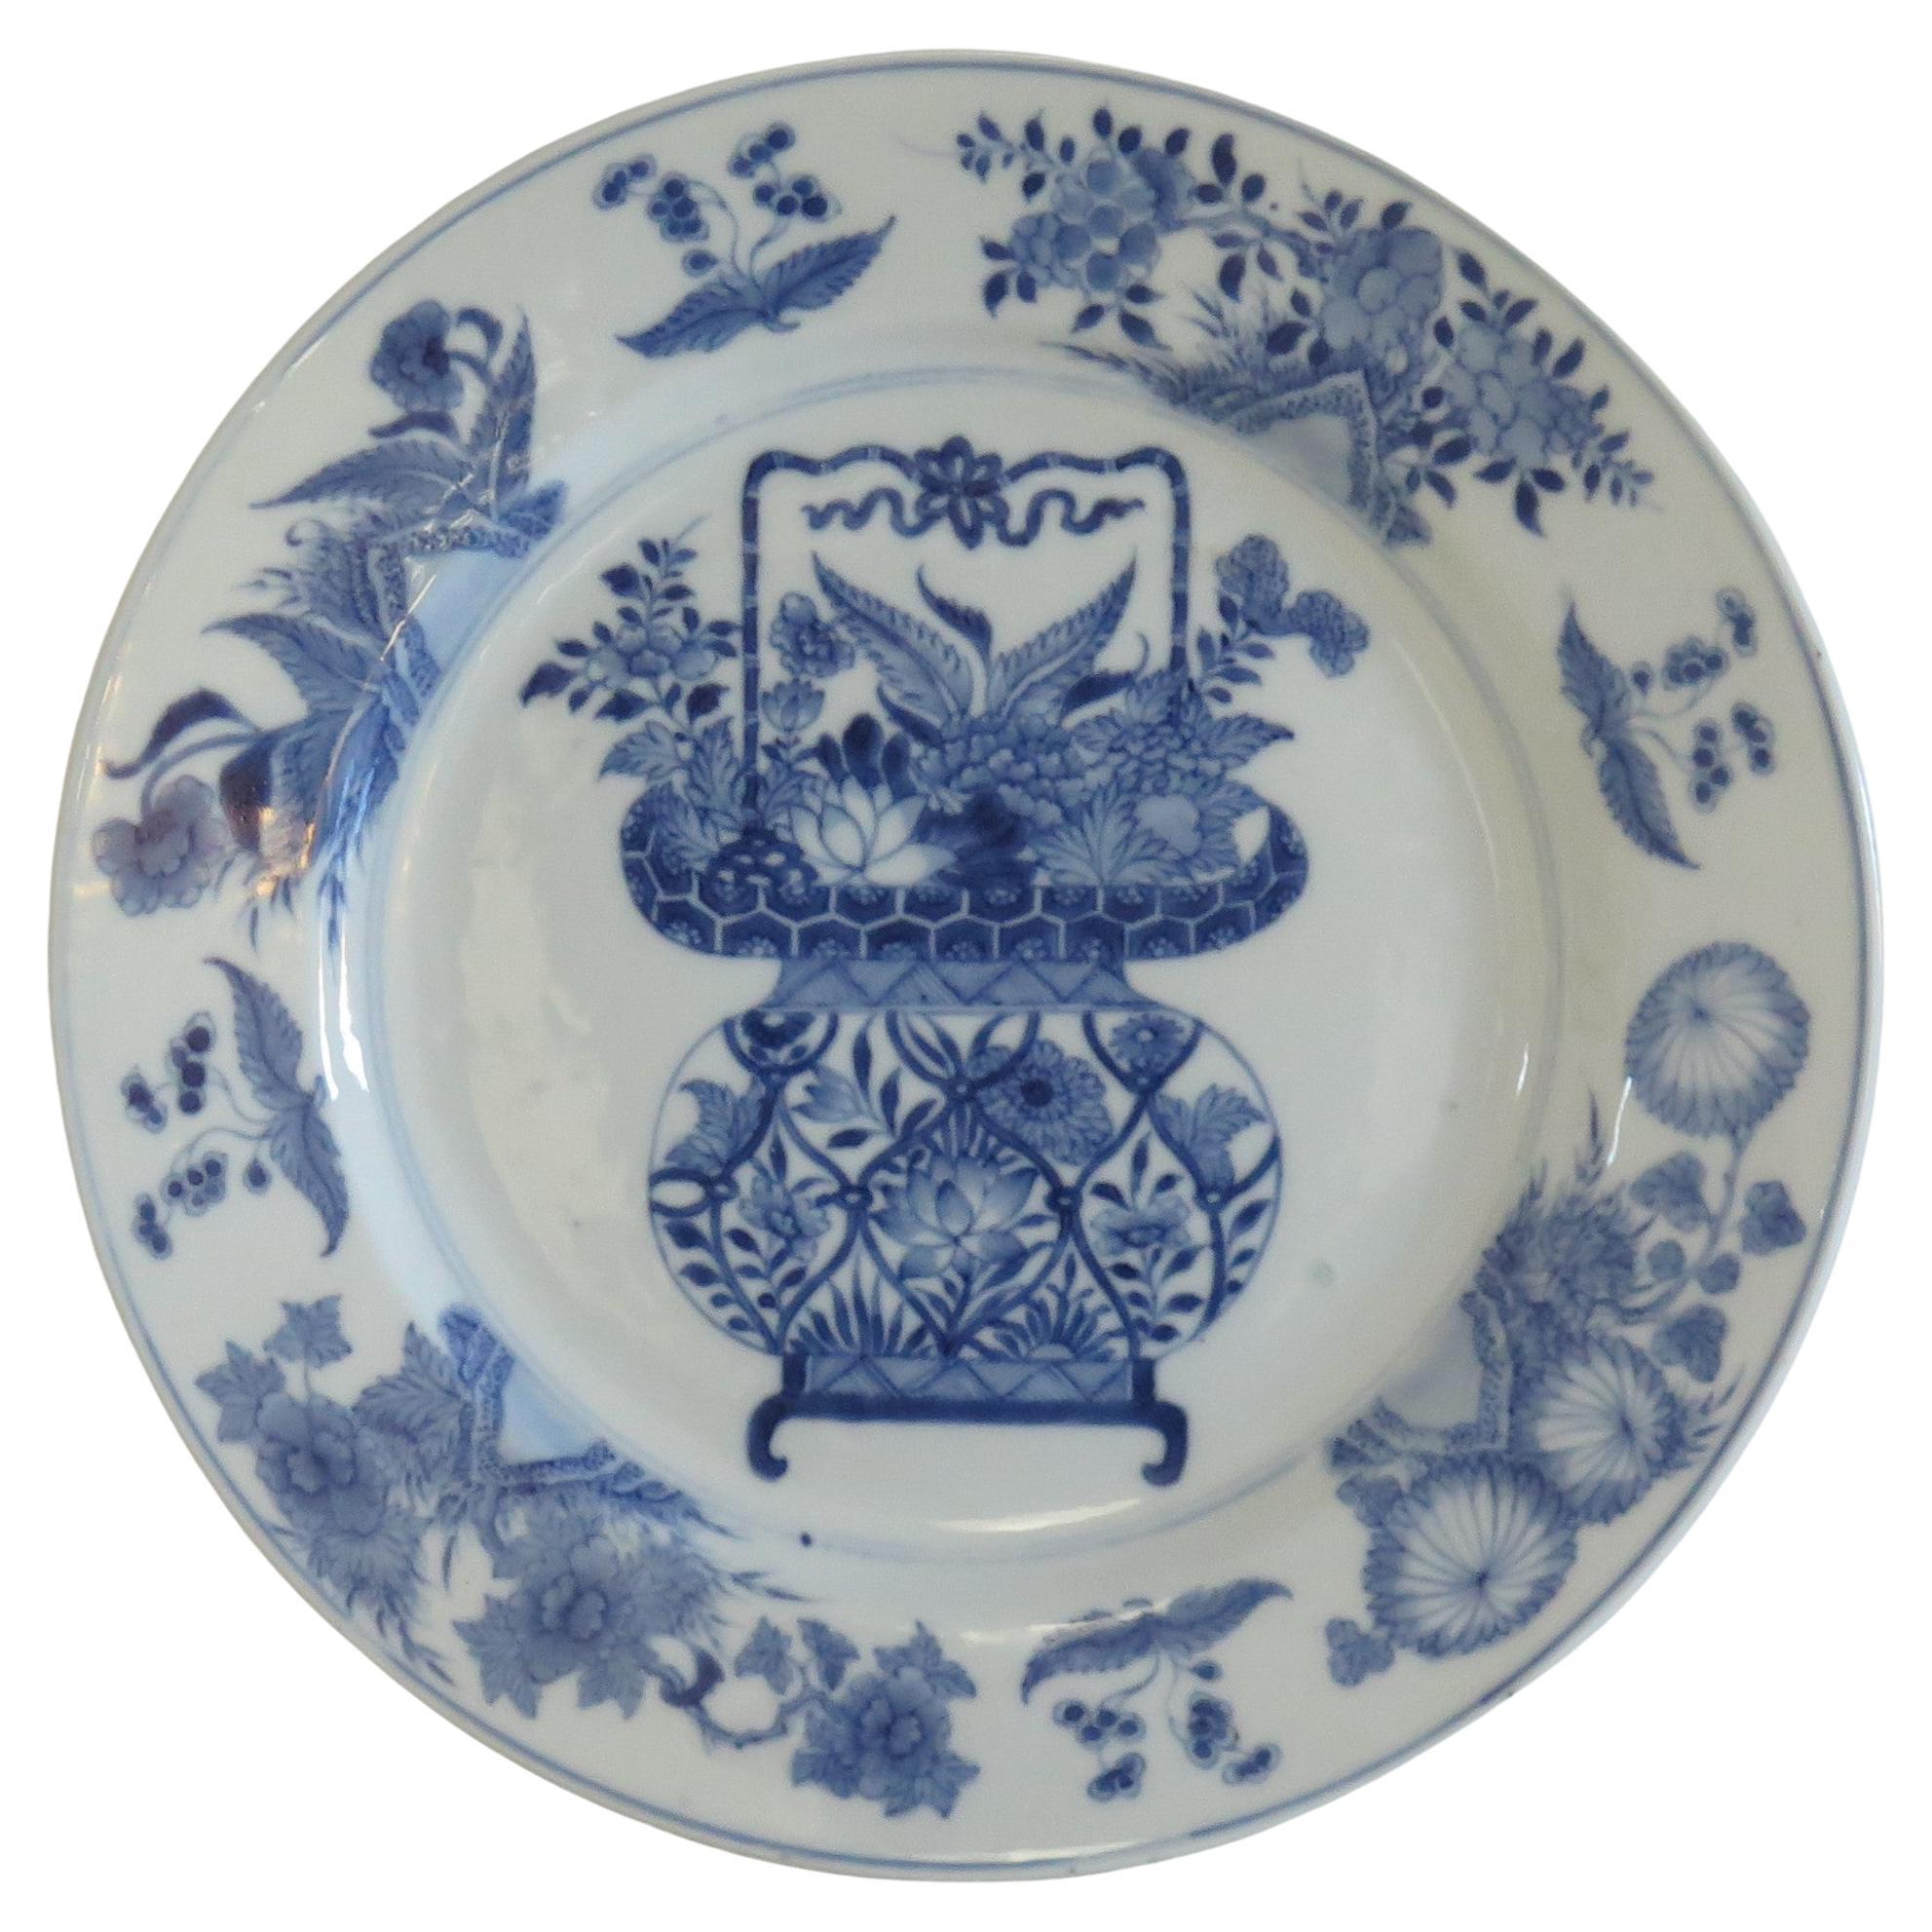 Kangxi marked Chinese Large Plate Porcelain Blue & White, Circa 1700